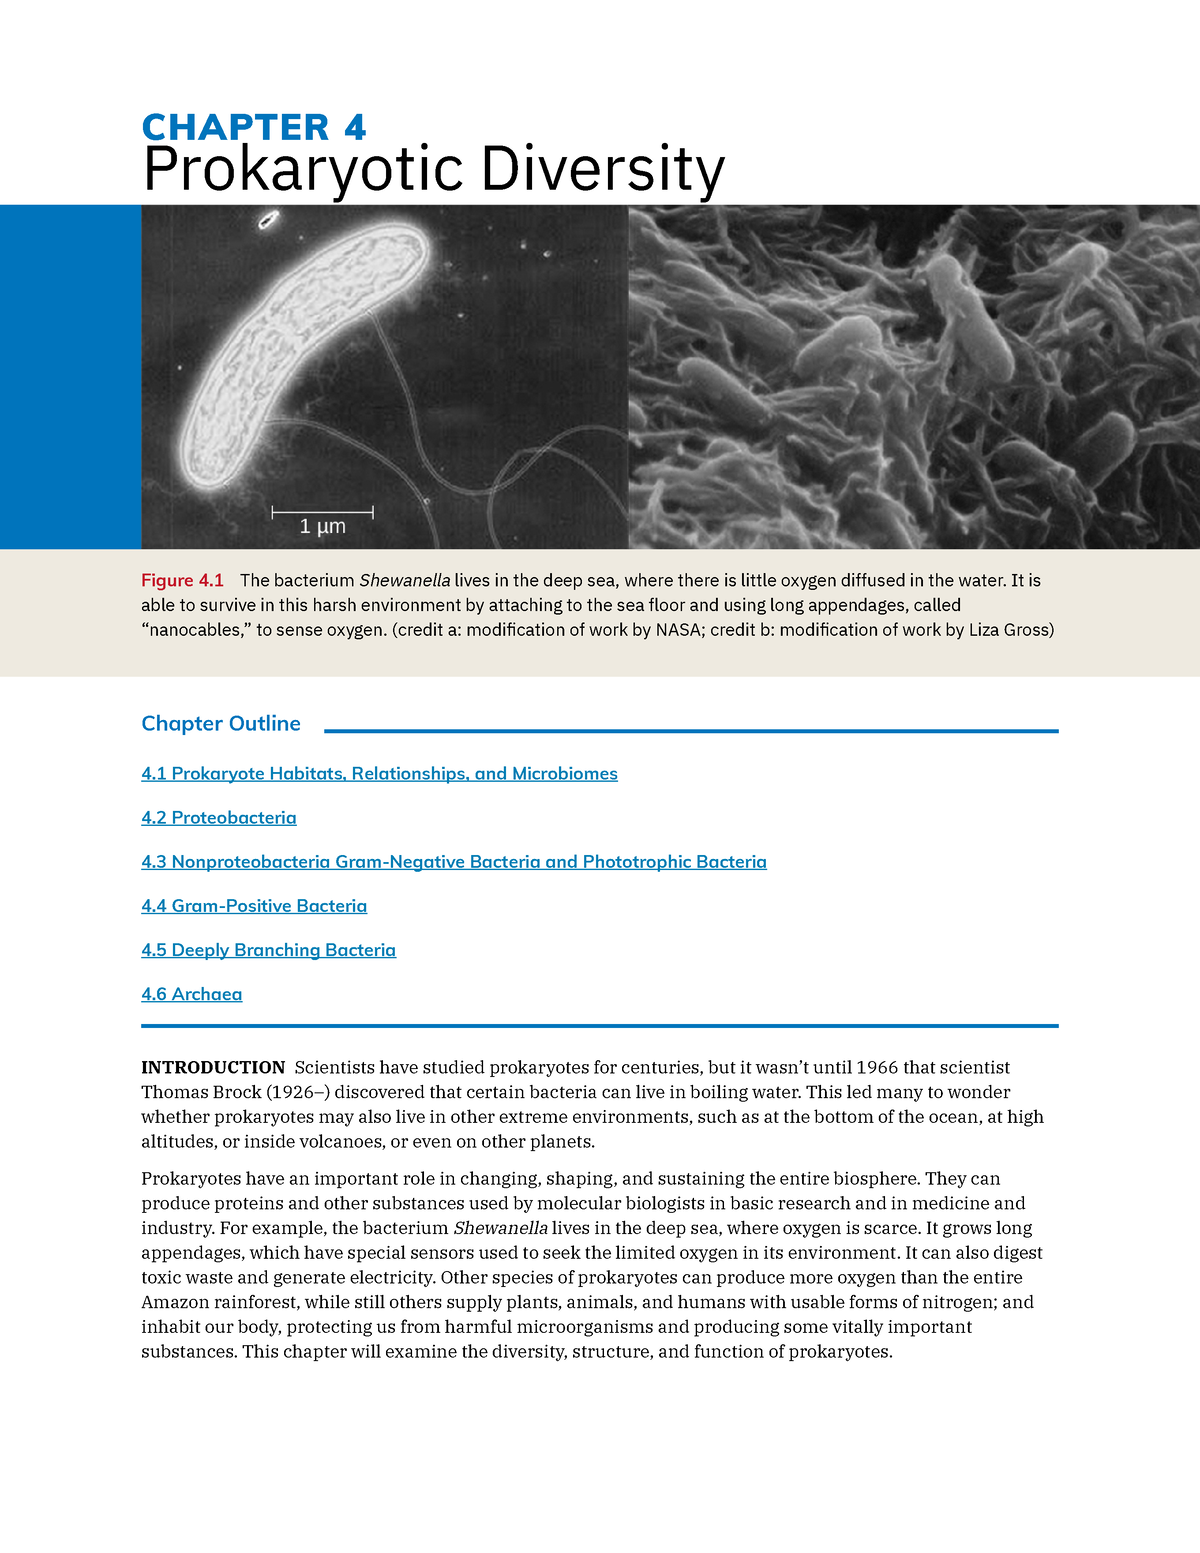 Chapter 4 Textbook INTRODUCTION CHAPTER 4 Prokaryotic Diversity 4 